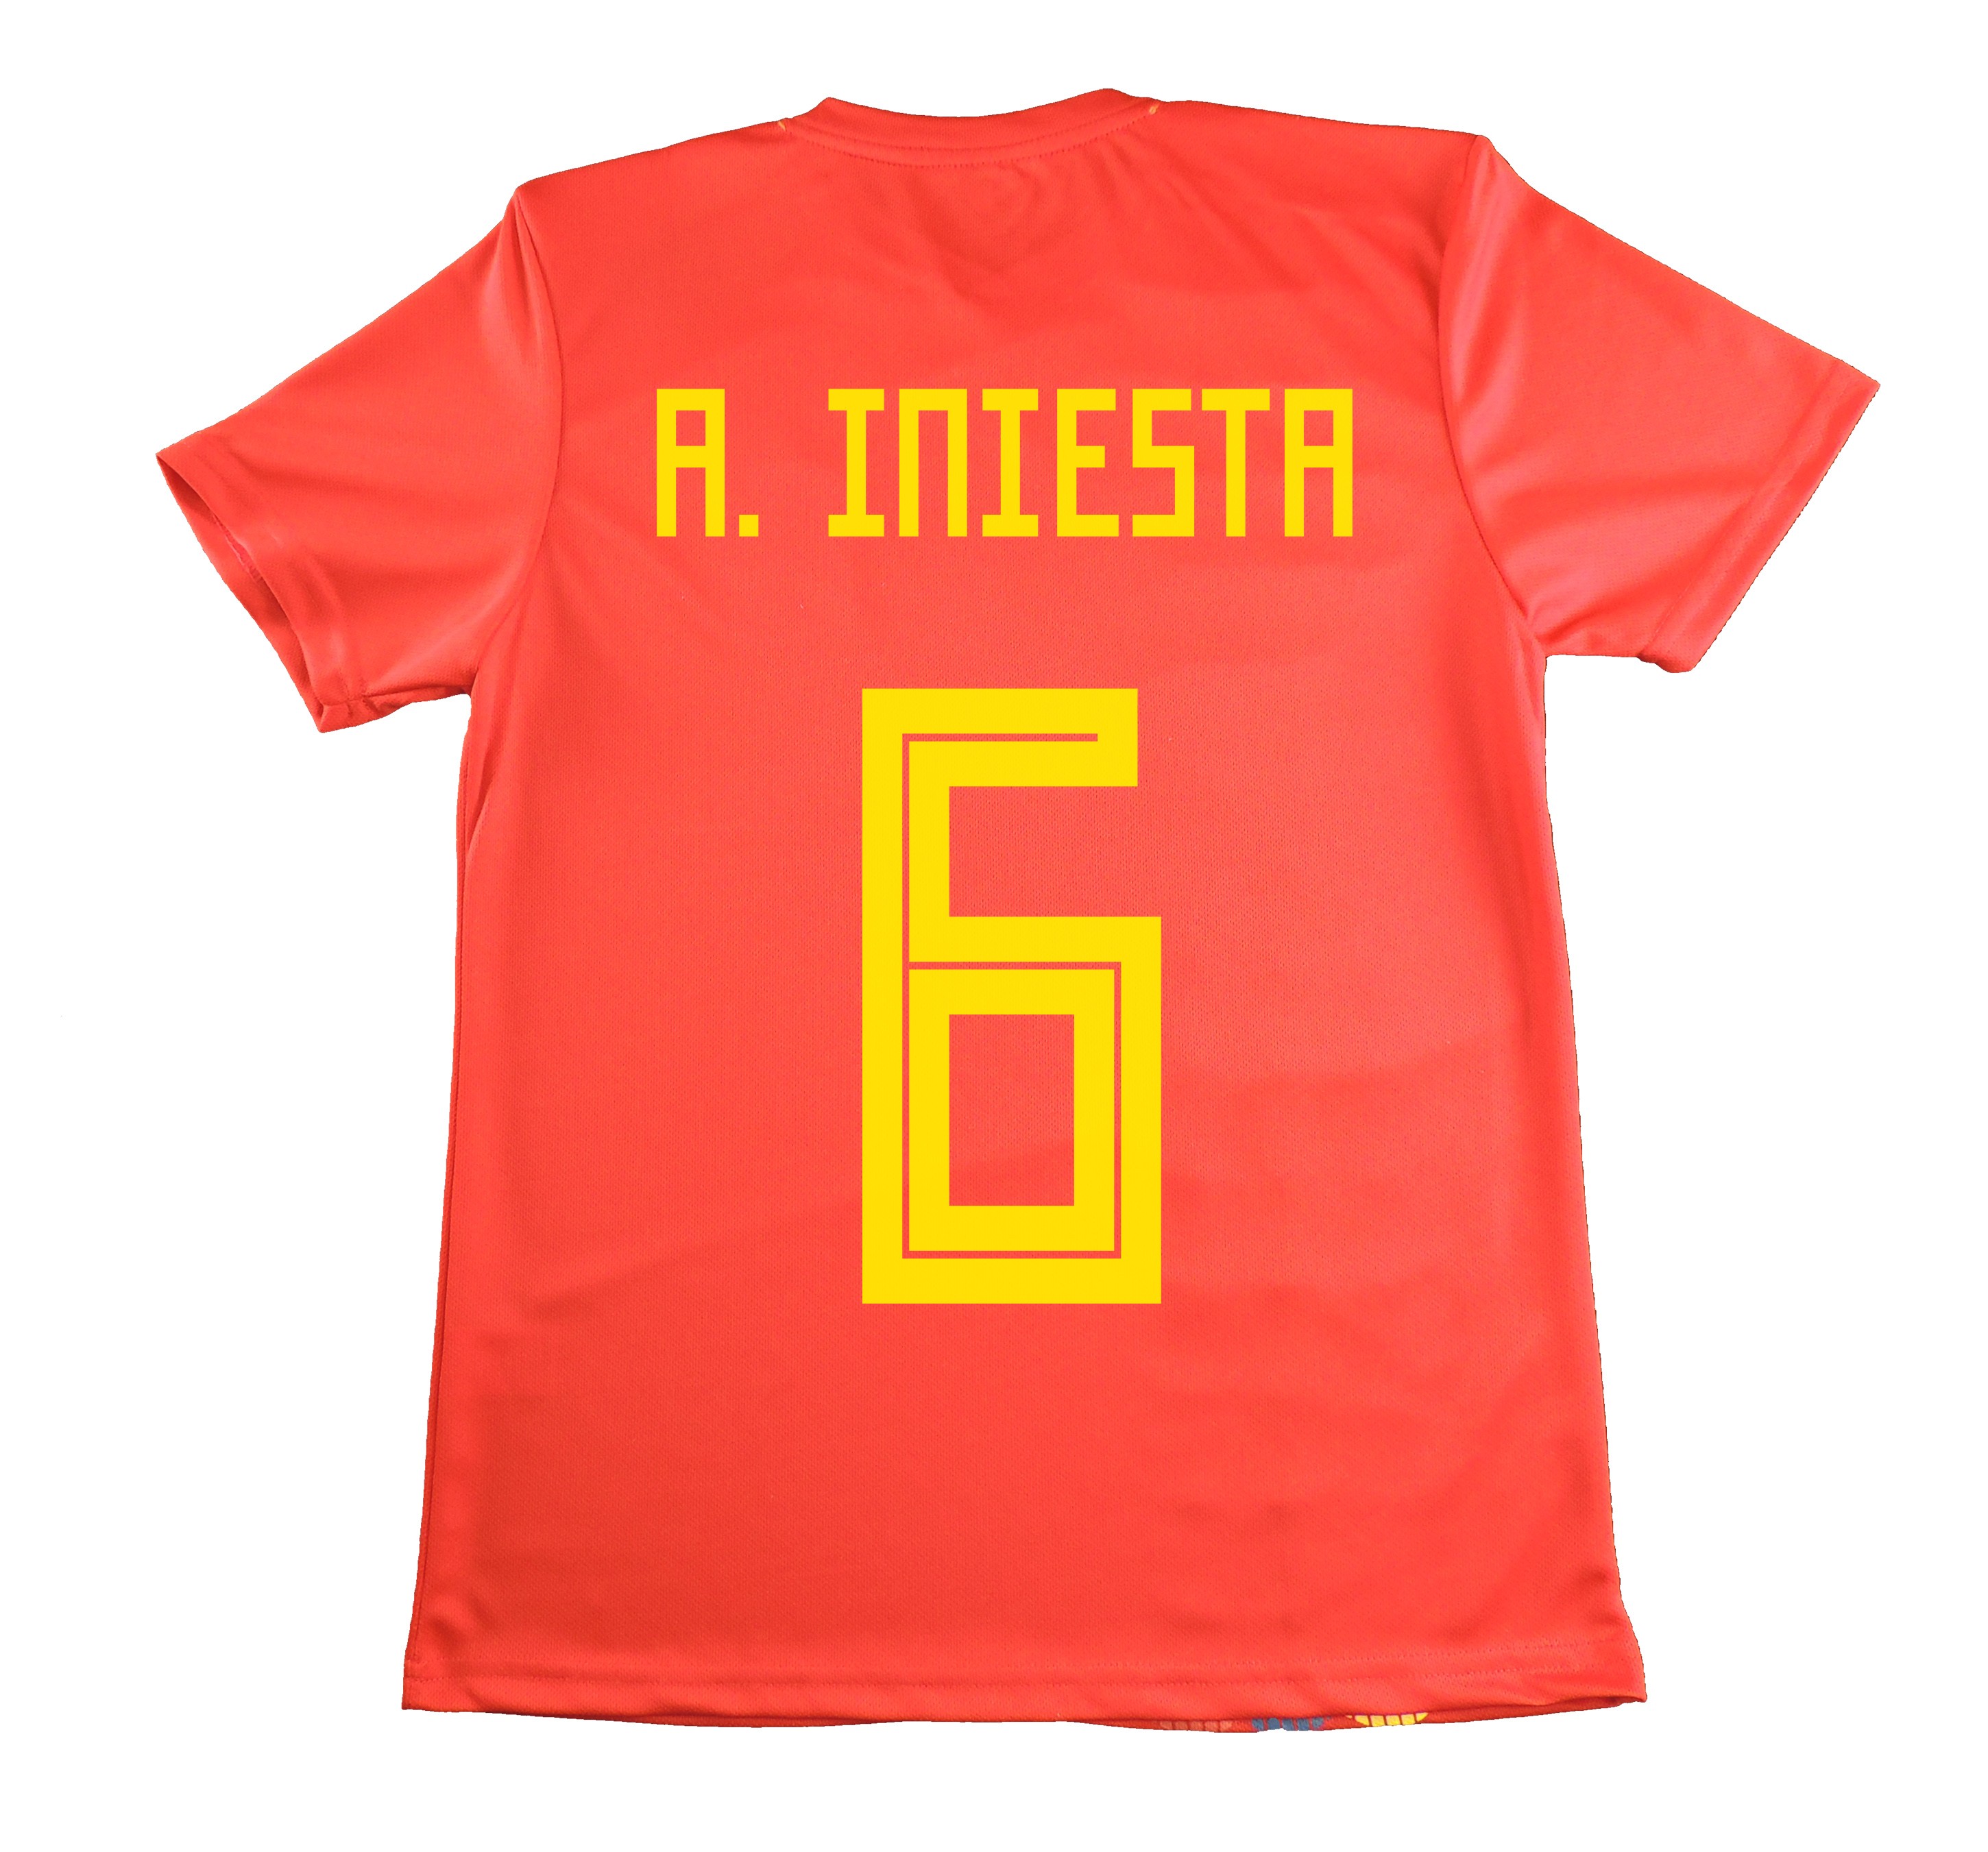 Camiseta Iniesta Réplica Selección de Producto Oficial Licenciado Mundial Rusia